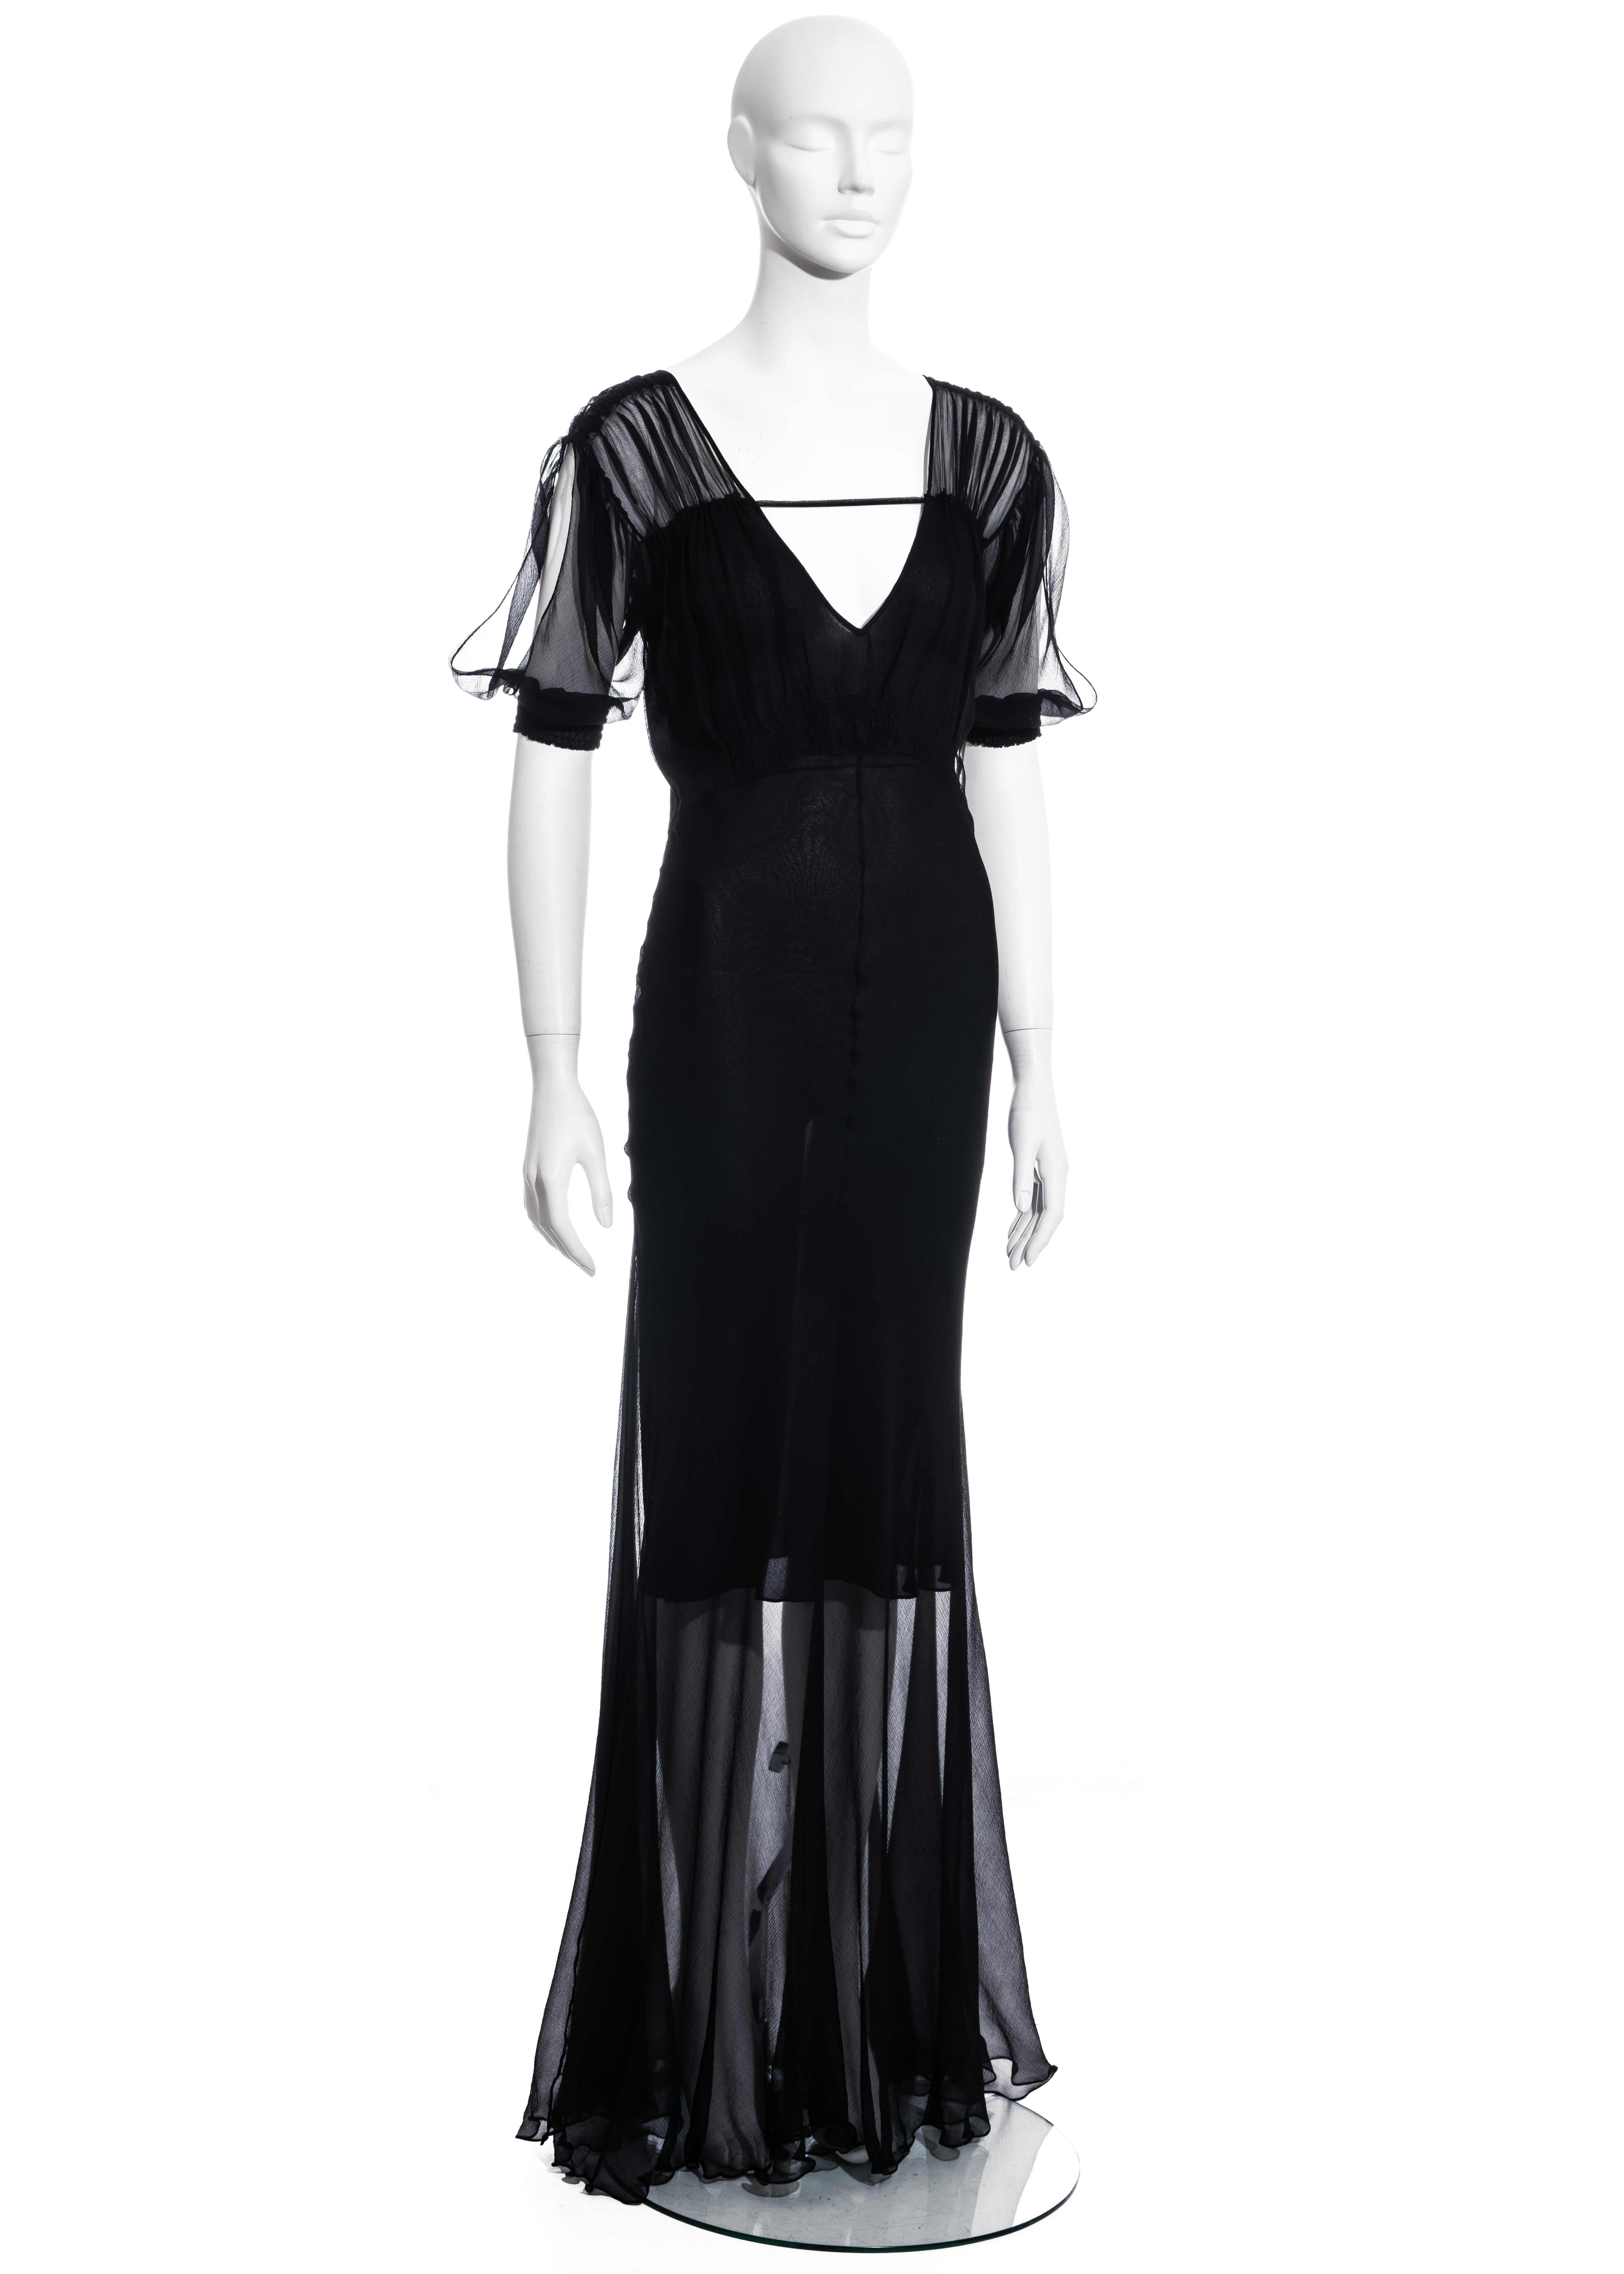 ▪ Christian Dior black chiffon evening dress
▪ Designed by John Galliano
▪ 100% Silk
▪ Puff sleeves with slits 
▪ V-neck 
▪ FR 40 - UK 12 - US 8
▪ Spring-Summer 2002